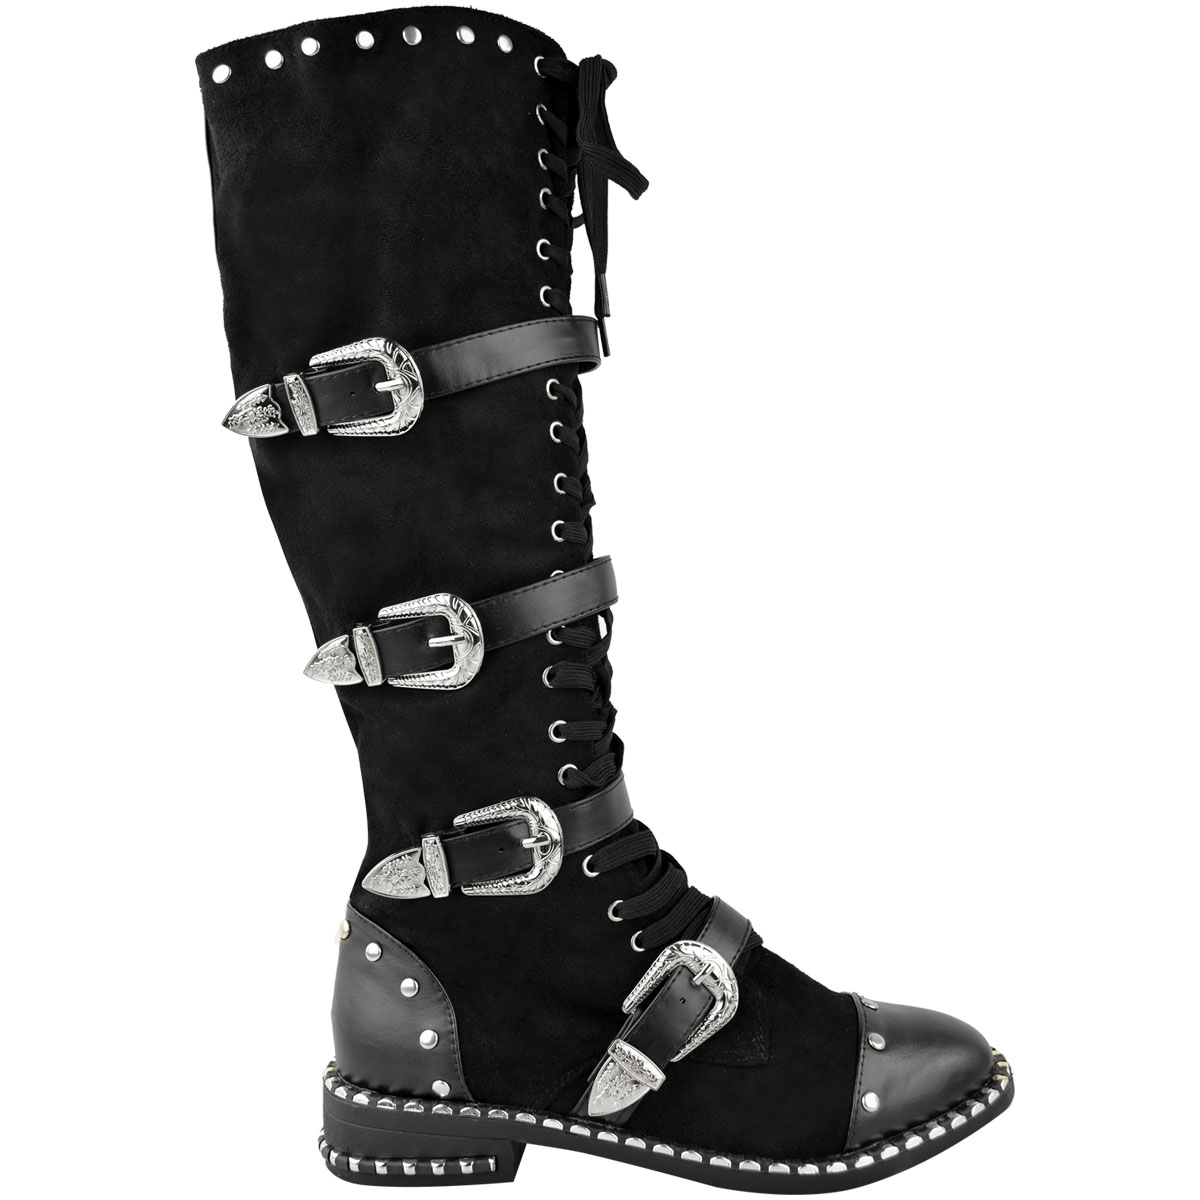 Womens Ladies Knee High Boots Studded Punk Grunge Rock Spikey Winter Calf Shoes